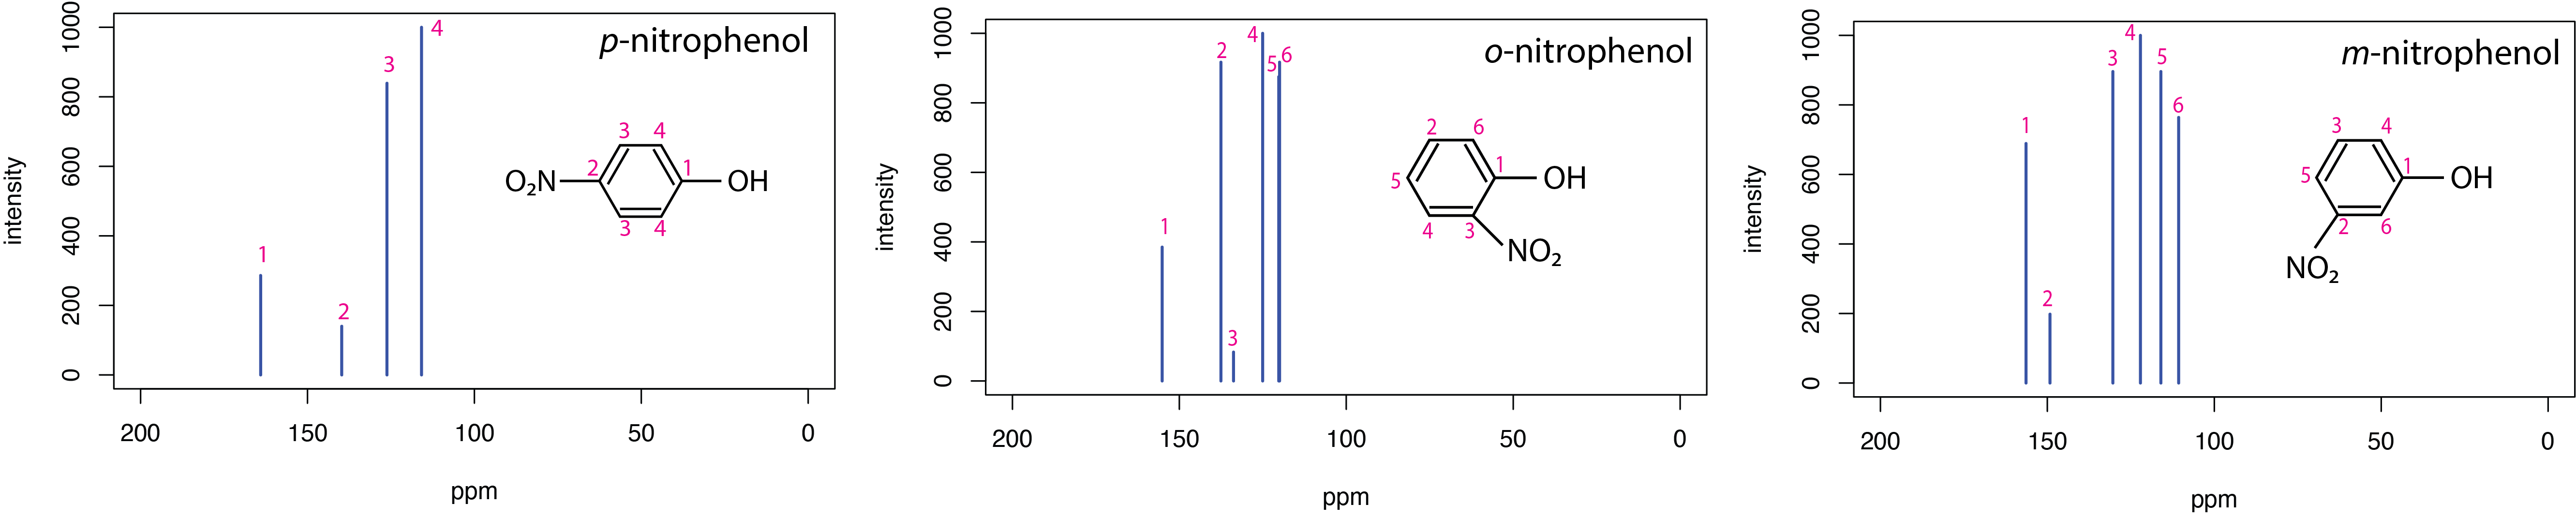 13C NMR spectra for three nitrophenols